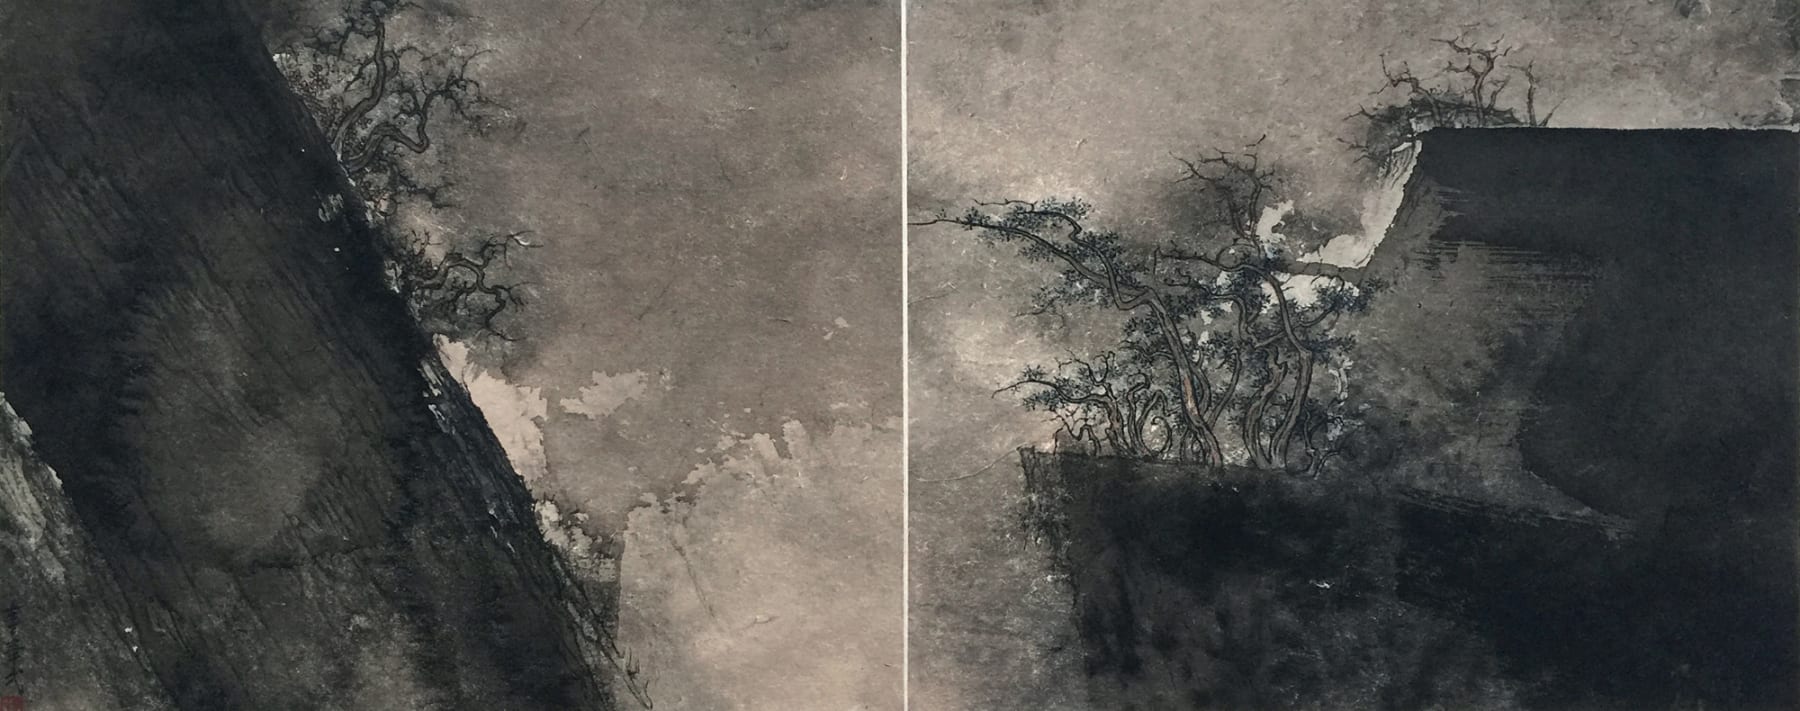 Li Huayi 李華弌, Landscape 《山水》, 2013